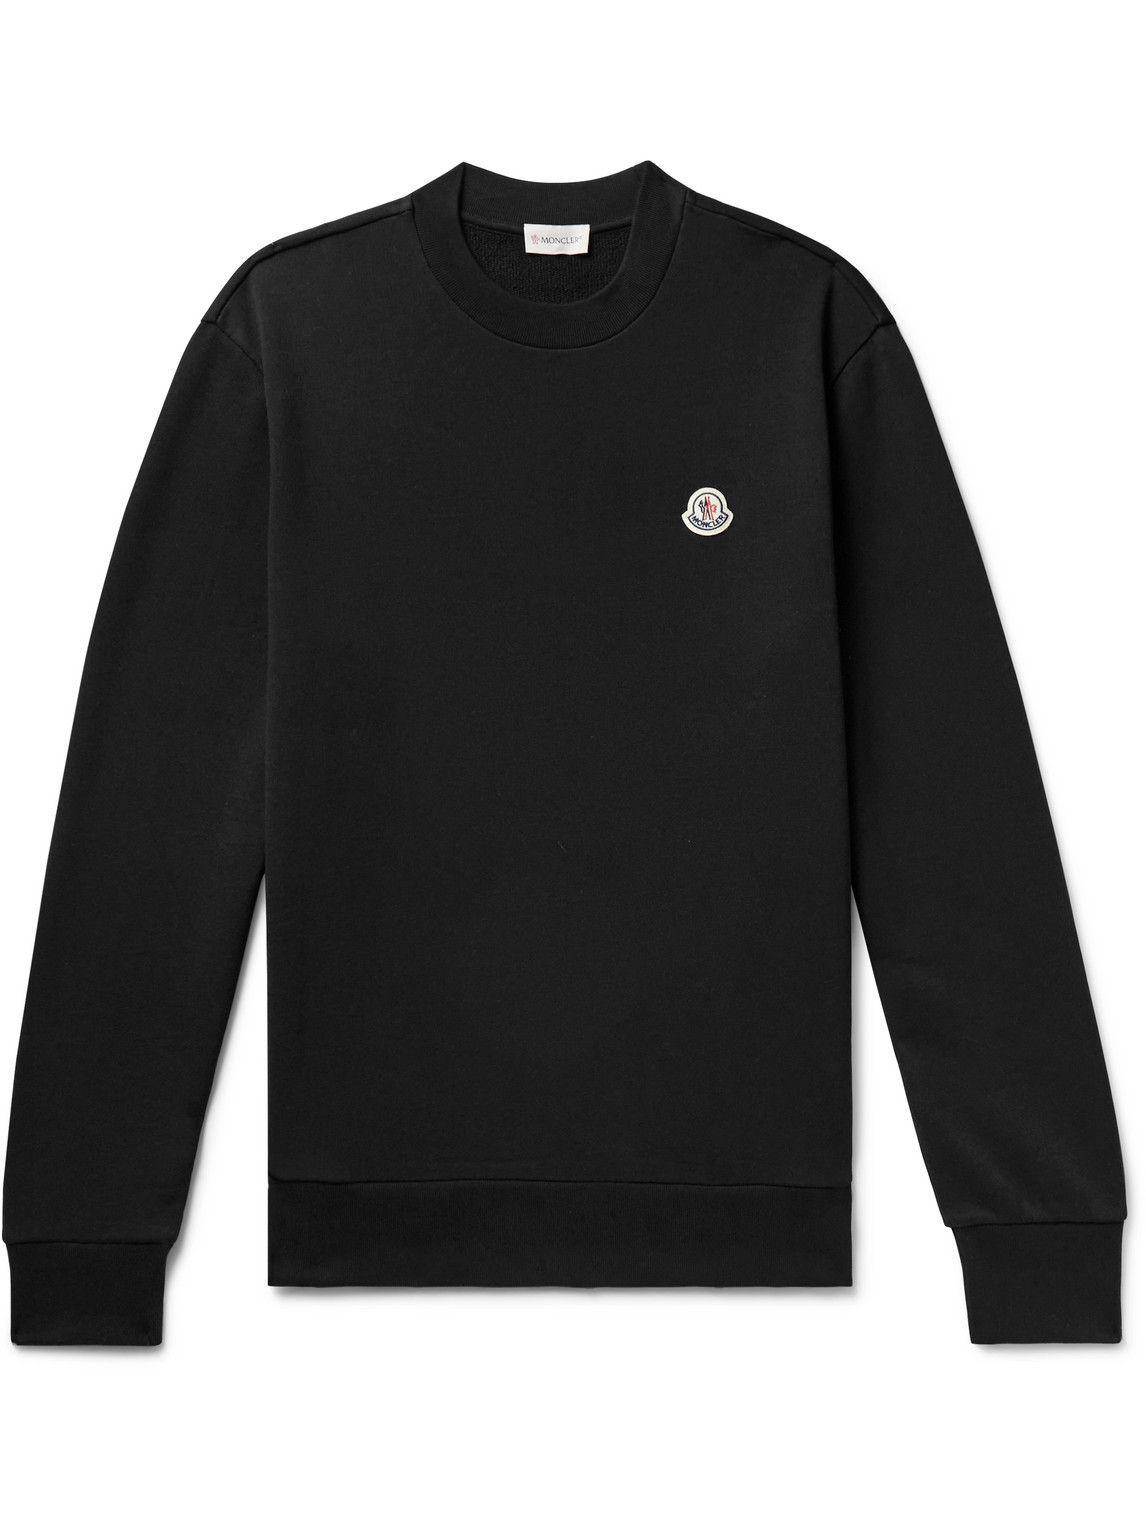 Photo: Moncler - Logo-Appliquéd Cotton-Jersey Sweatshirt - Black